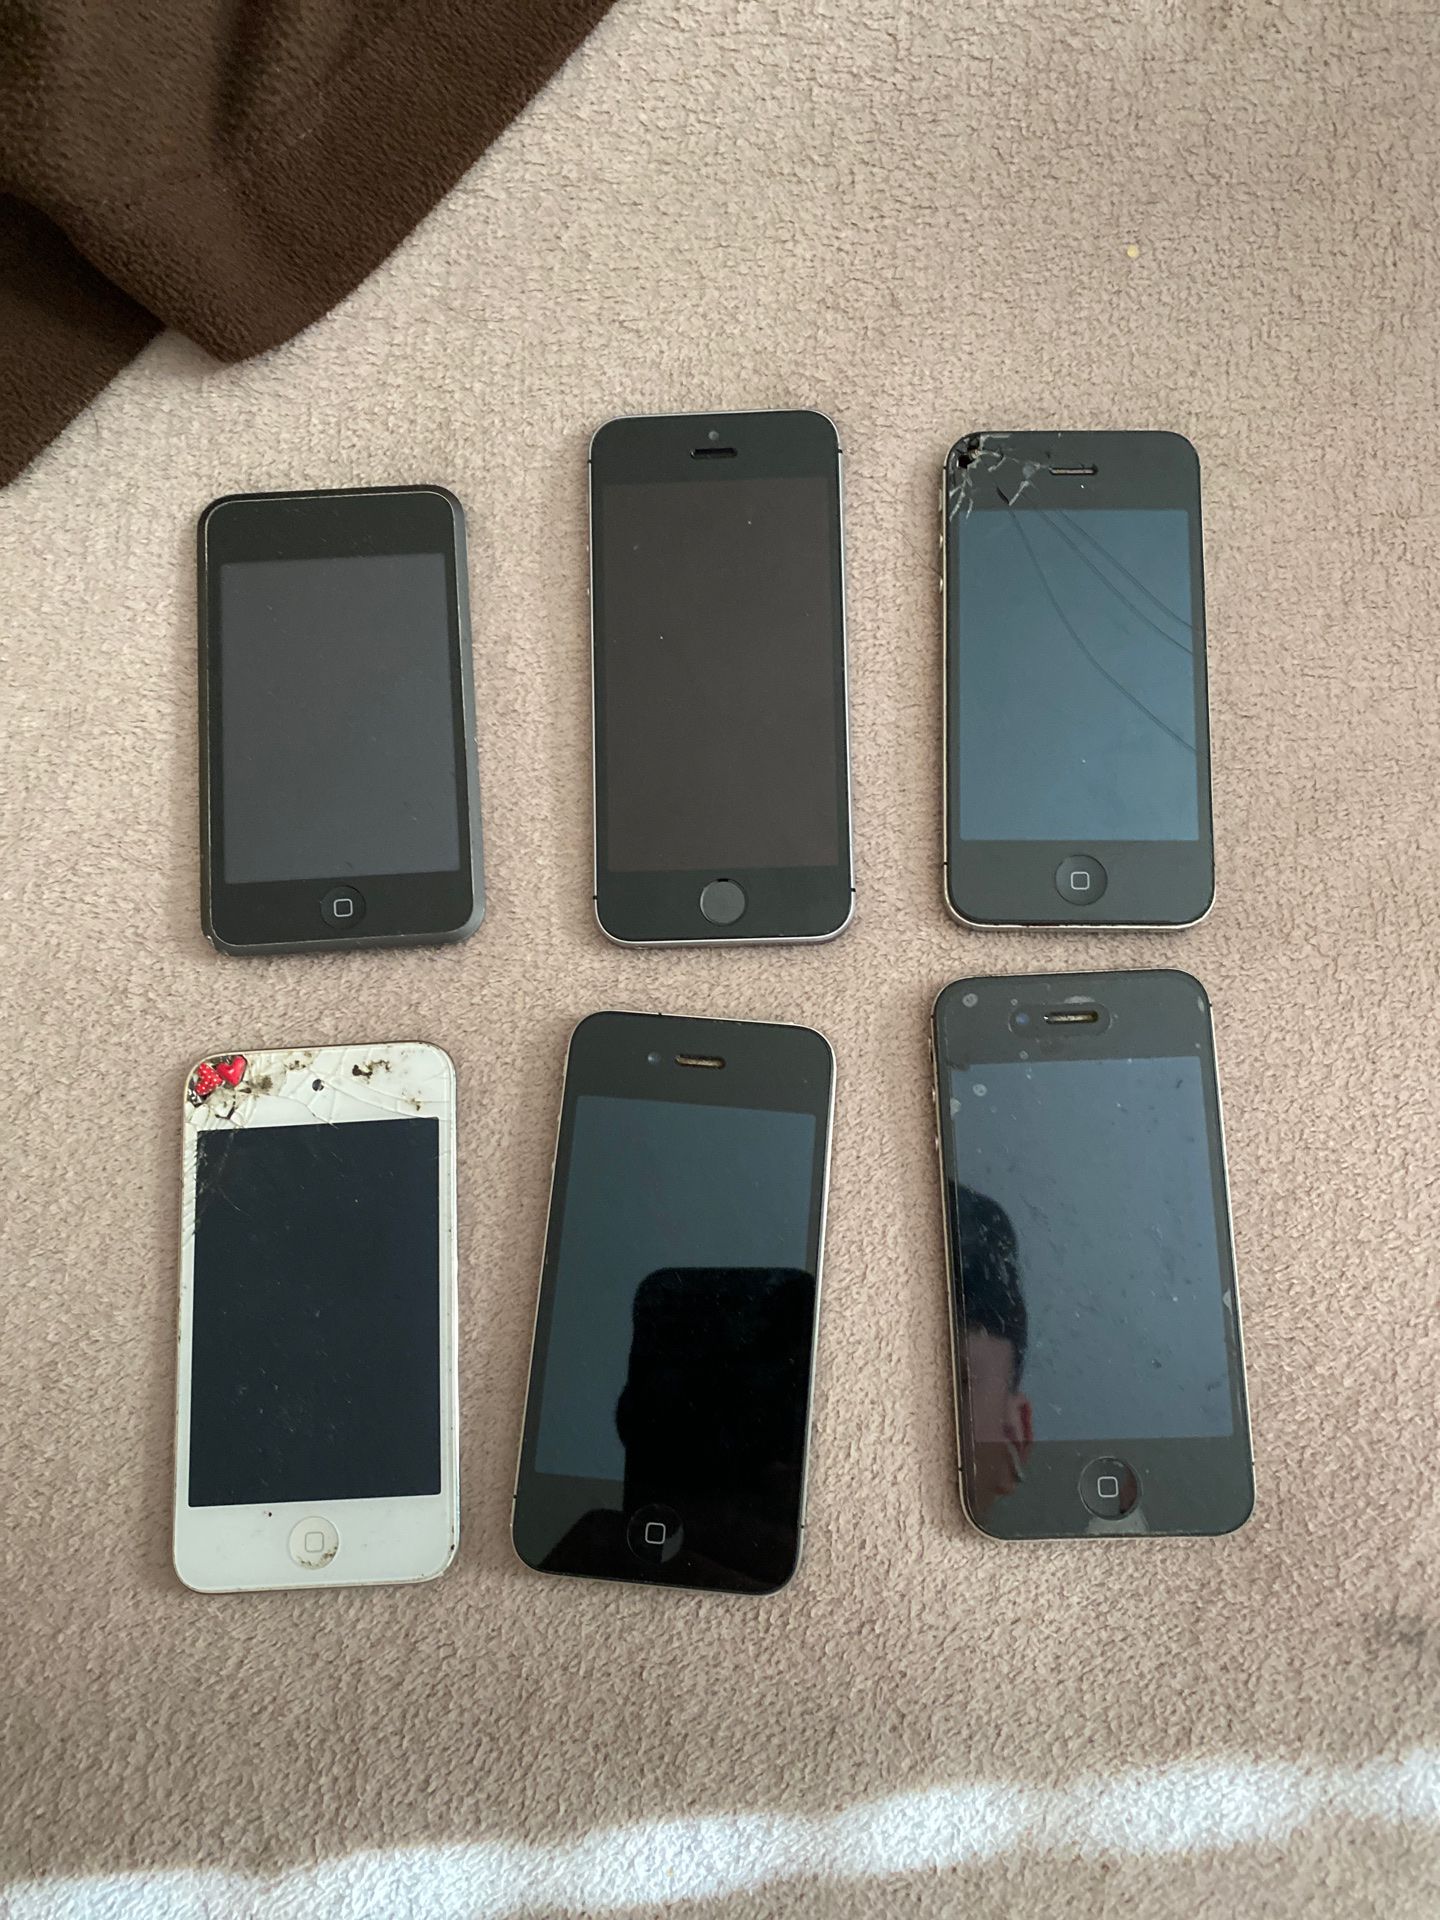 Old IPhones